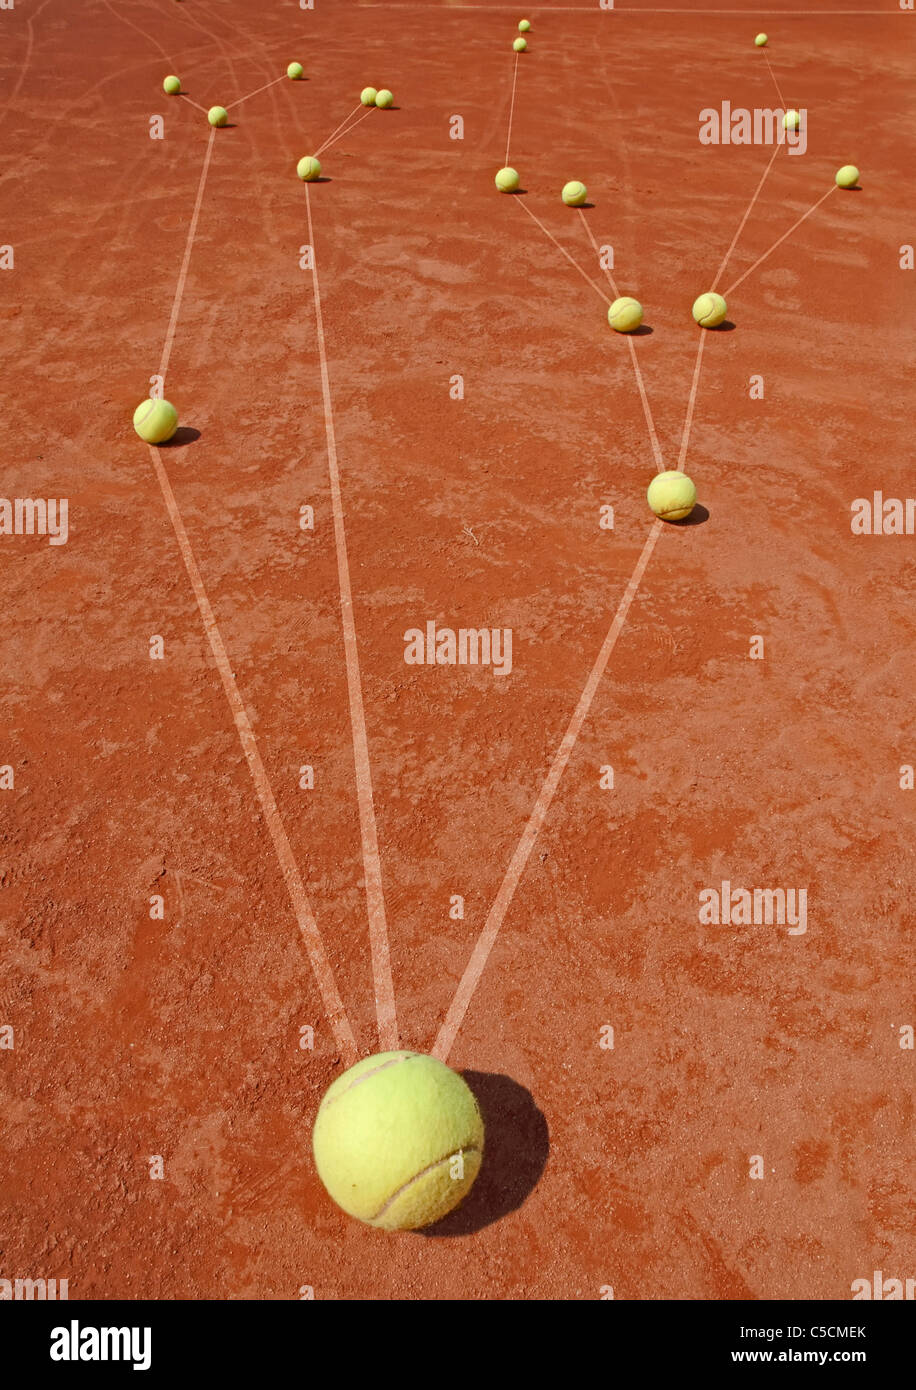 Business metaphor with tennis balls on cort Stock Photo